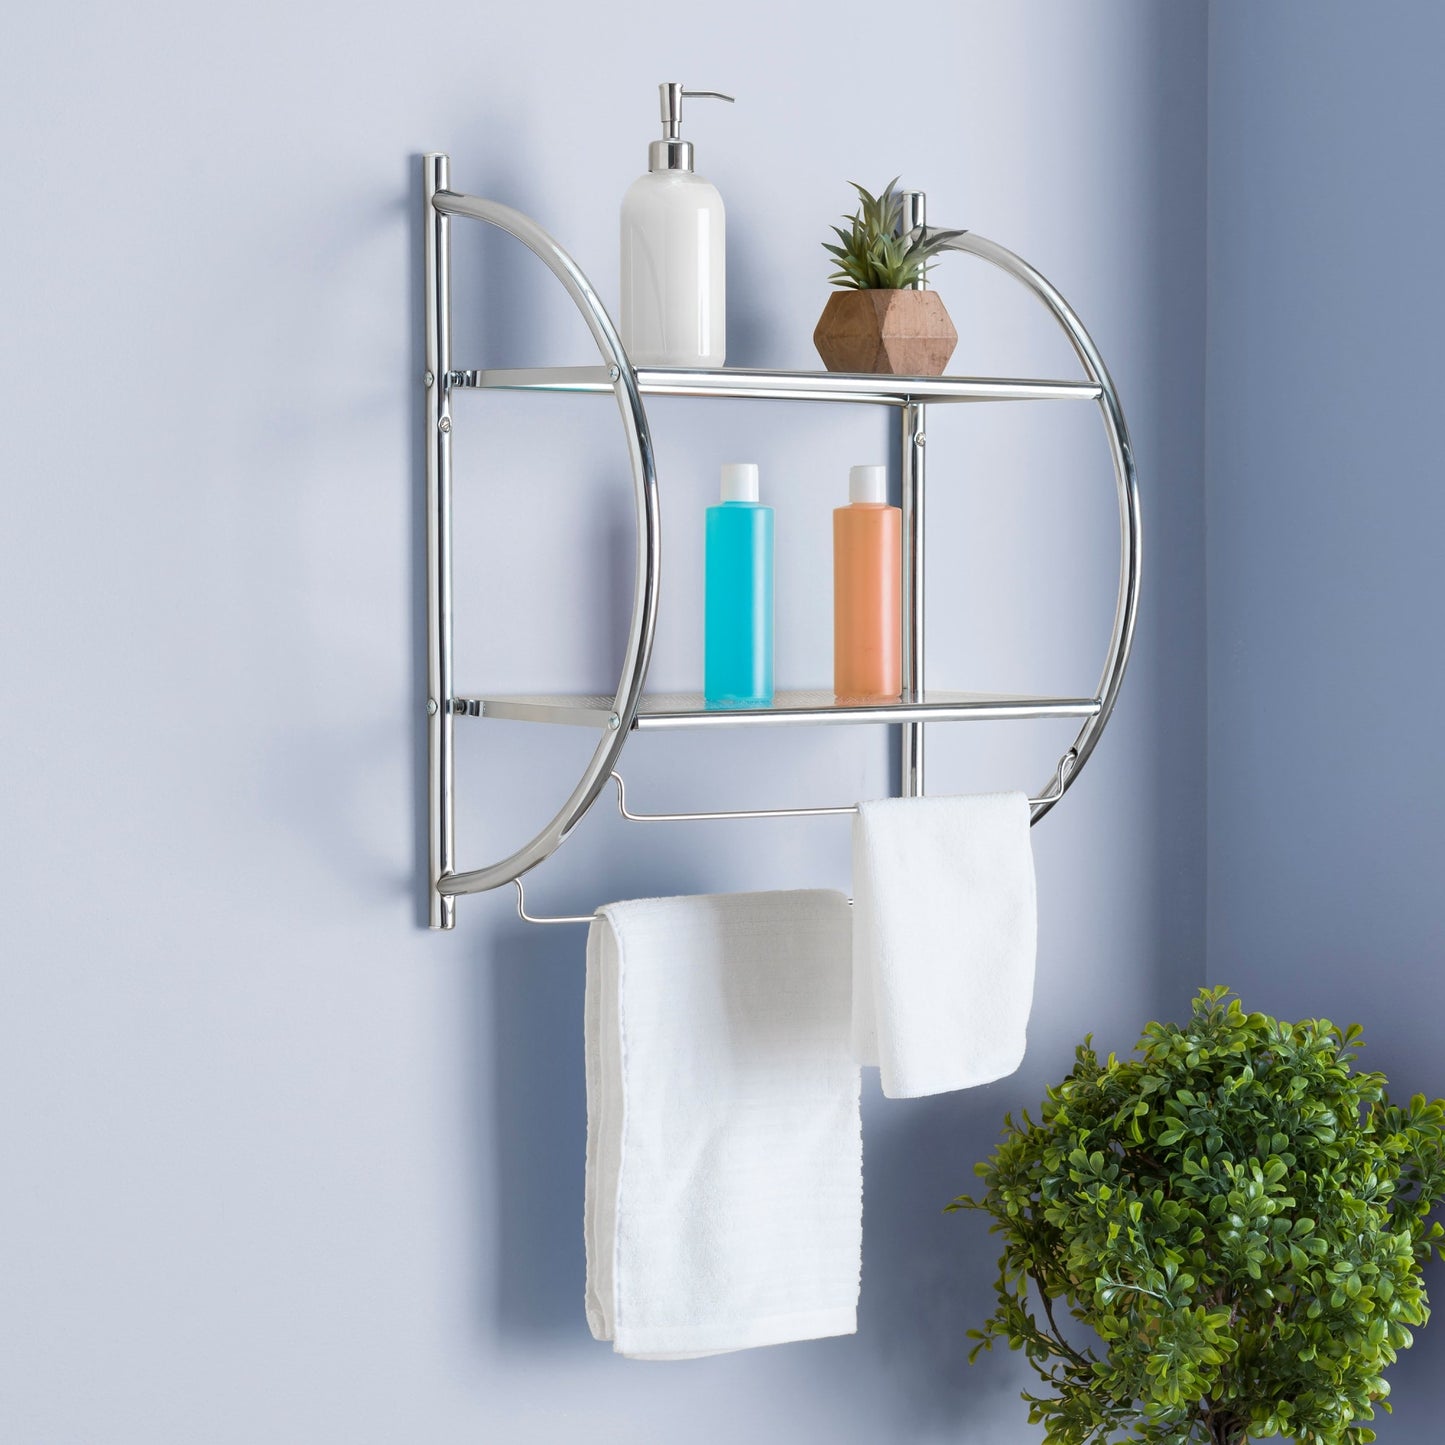 2 Tier Wall Mounting Chrome Plated Steel Bathroom Shelf with Towel Bar